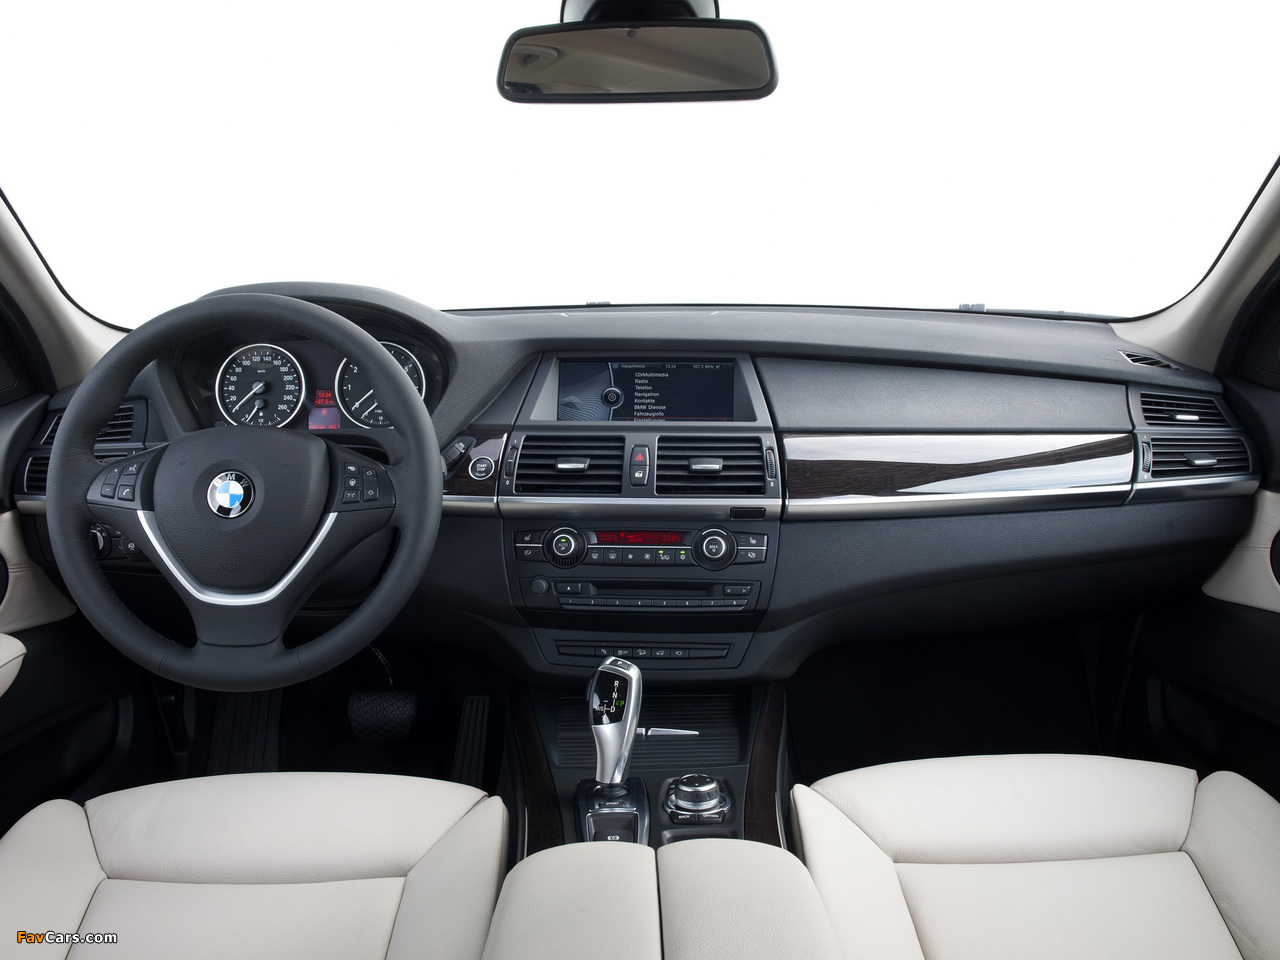 BMW X5 xDrive50i (E70) 2010 photos (1280 x 960)